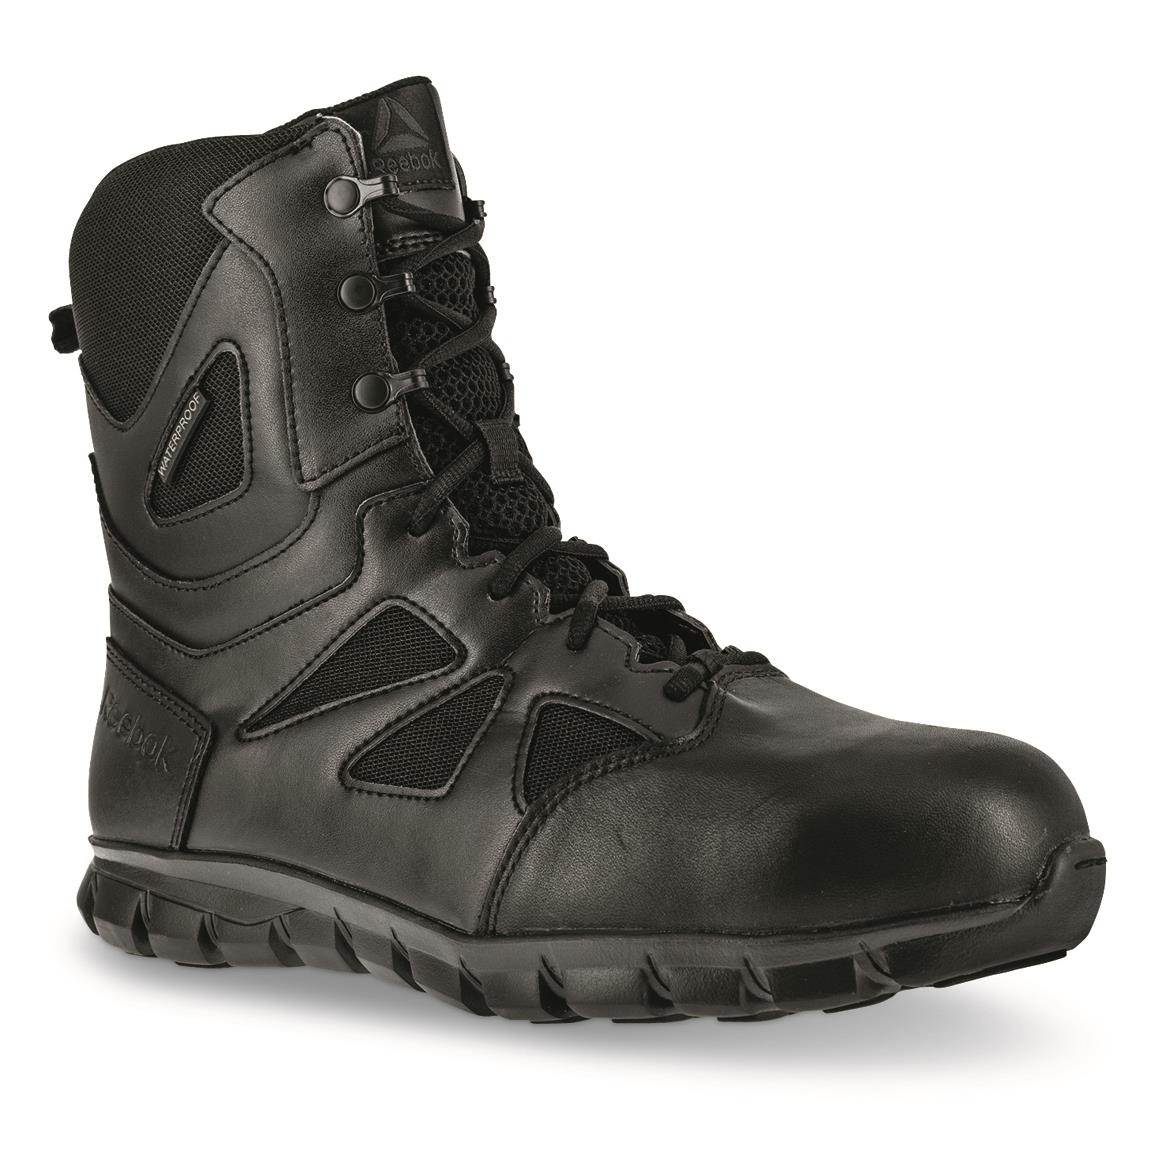 Reebok Men's 8" Sublite Cushion Waterproof Composite Toe Side-zip Tactical Boots, Black